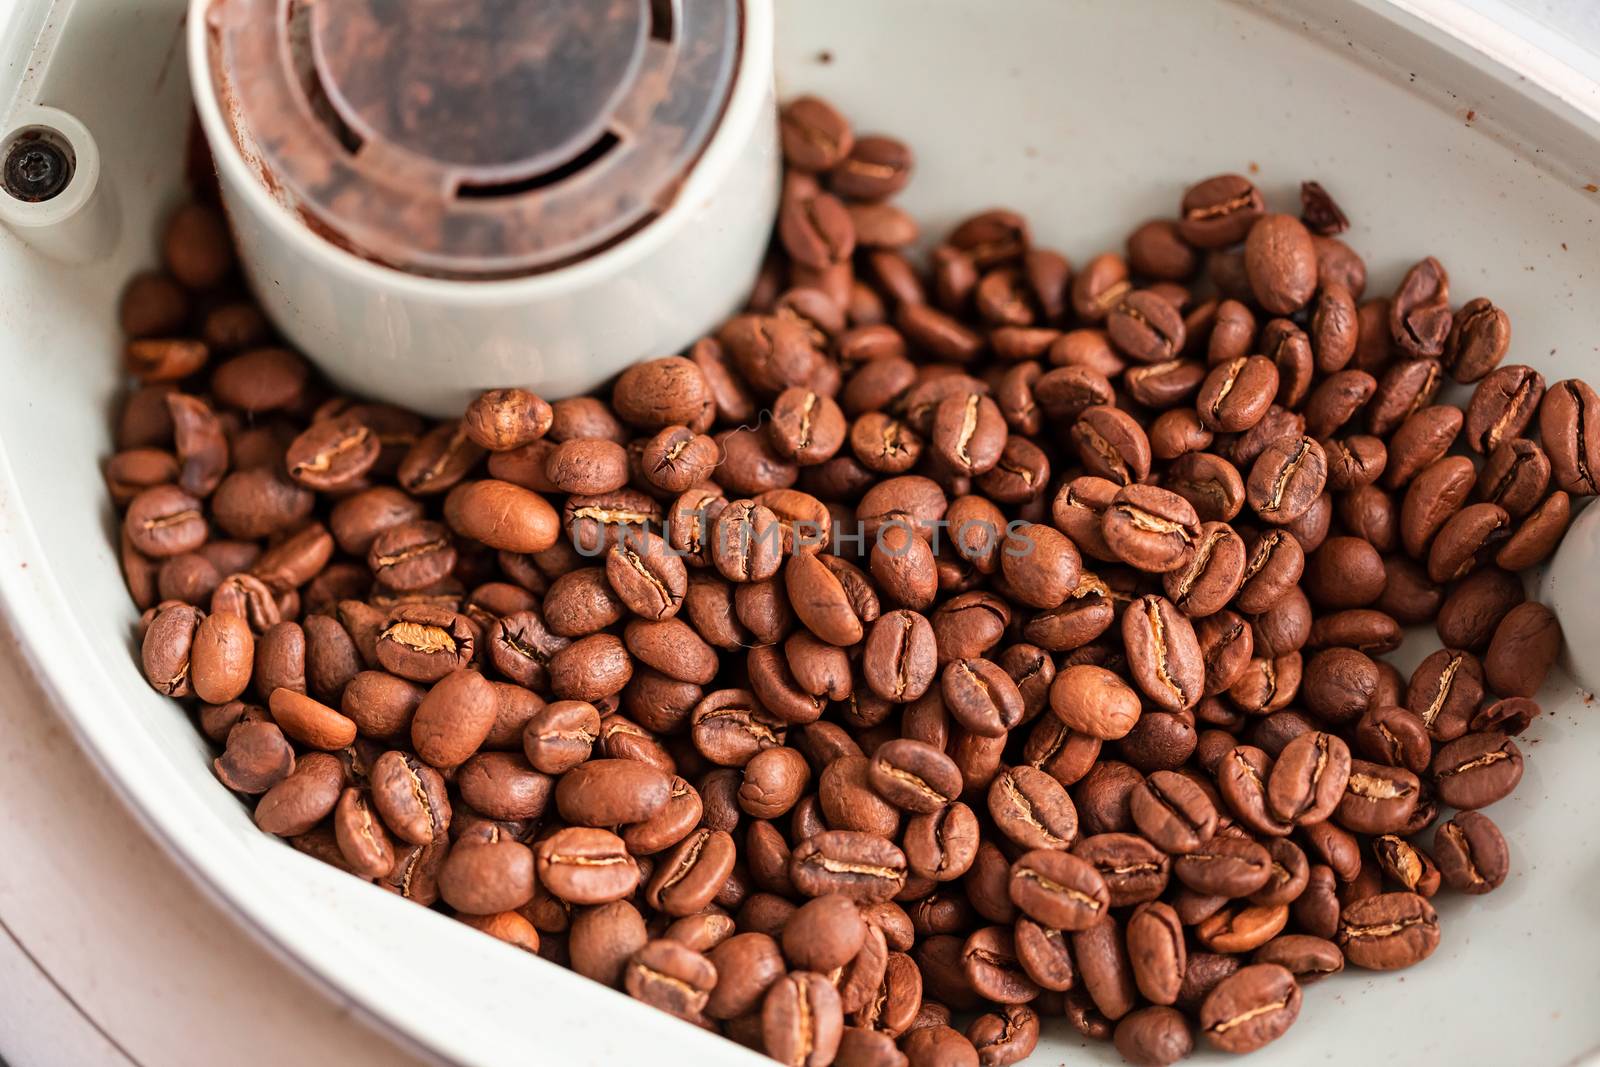 Coffee beans into the coffee machine dispenser before preparing coffee.